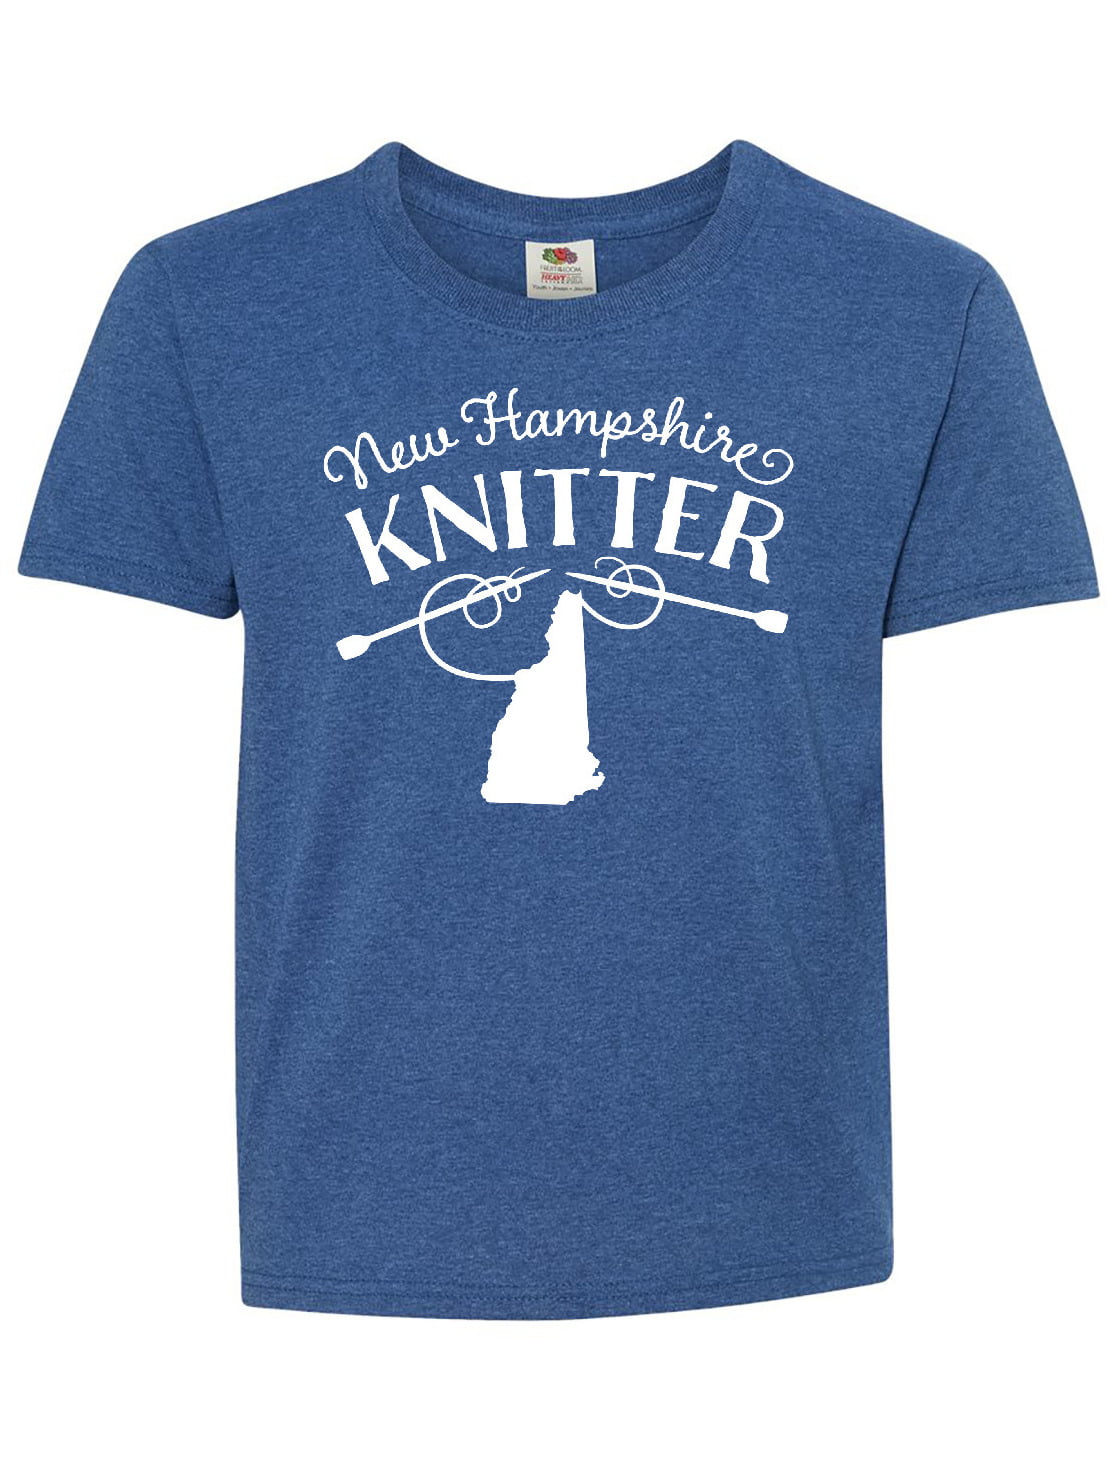 New Hampshire Knitter in White Youth T-Shirt - Walmart.com - Walmart.com